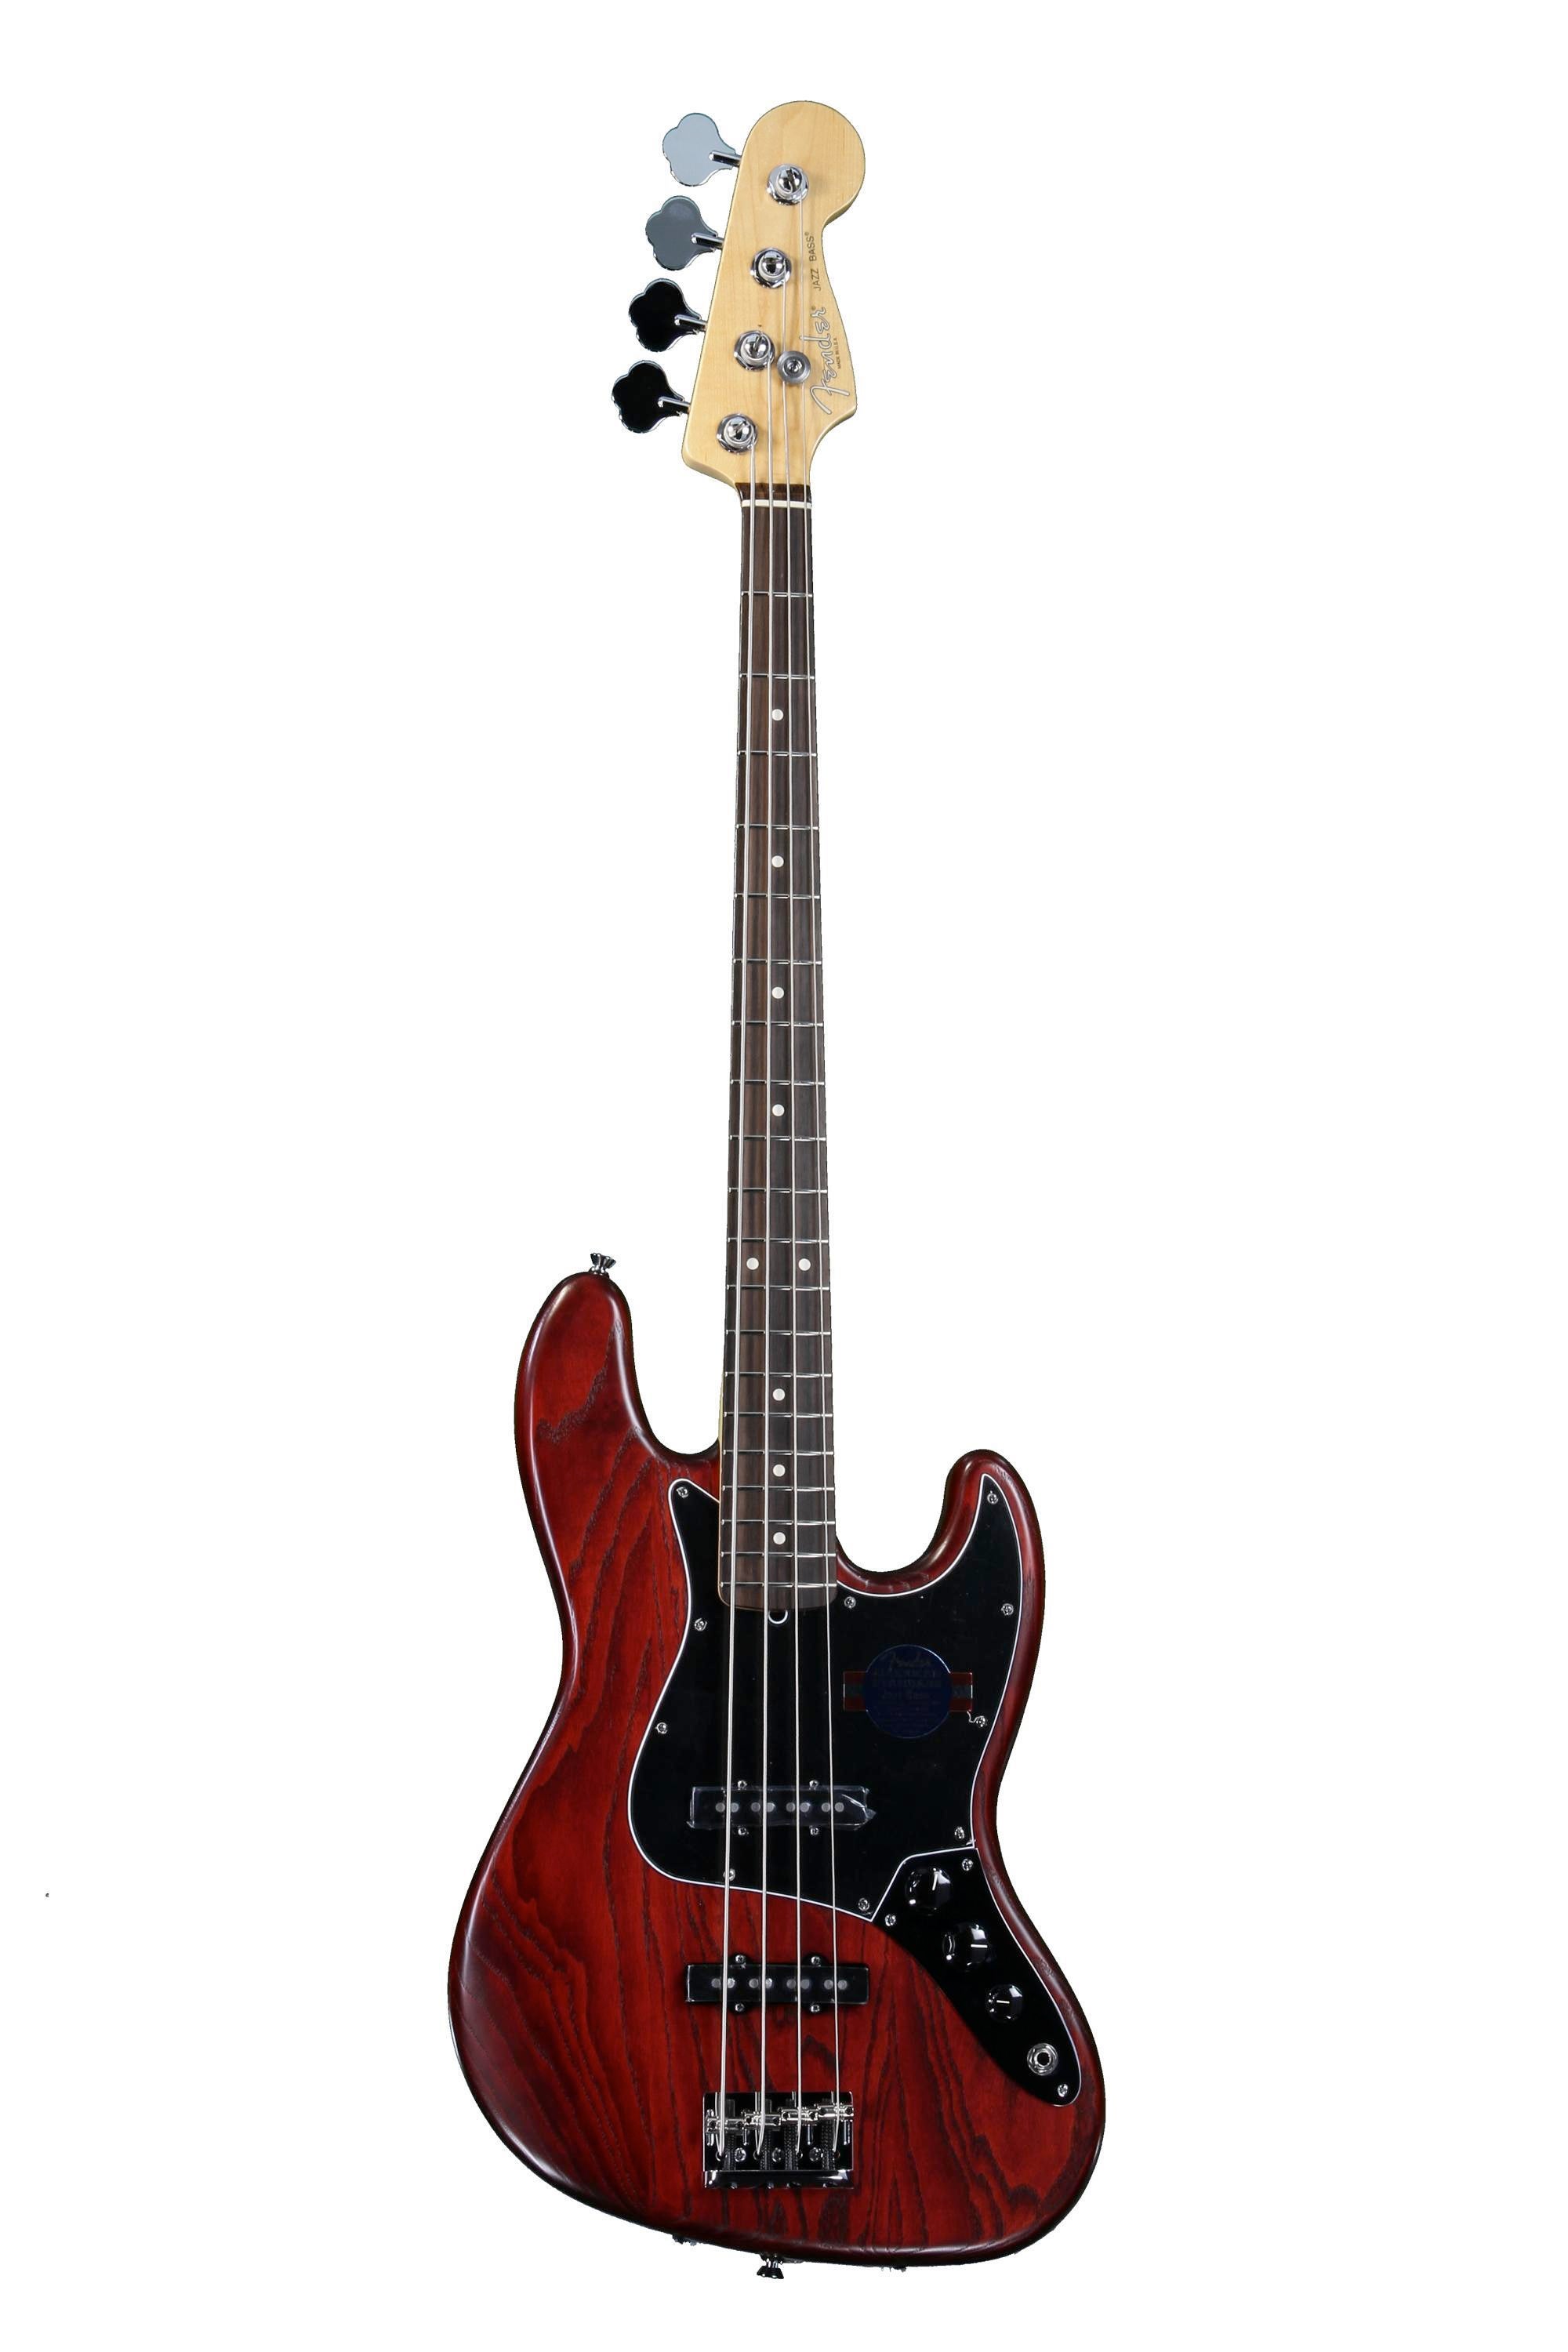 Fender American Standard Hand-stained Ash Jazz Bass - Wine Red FSR